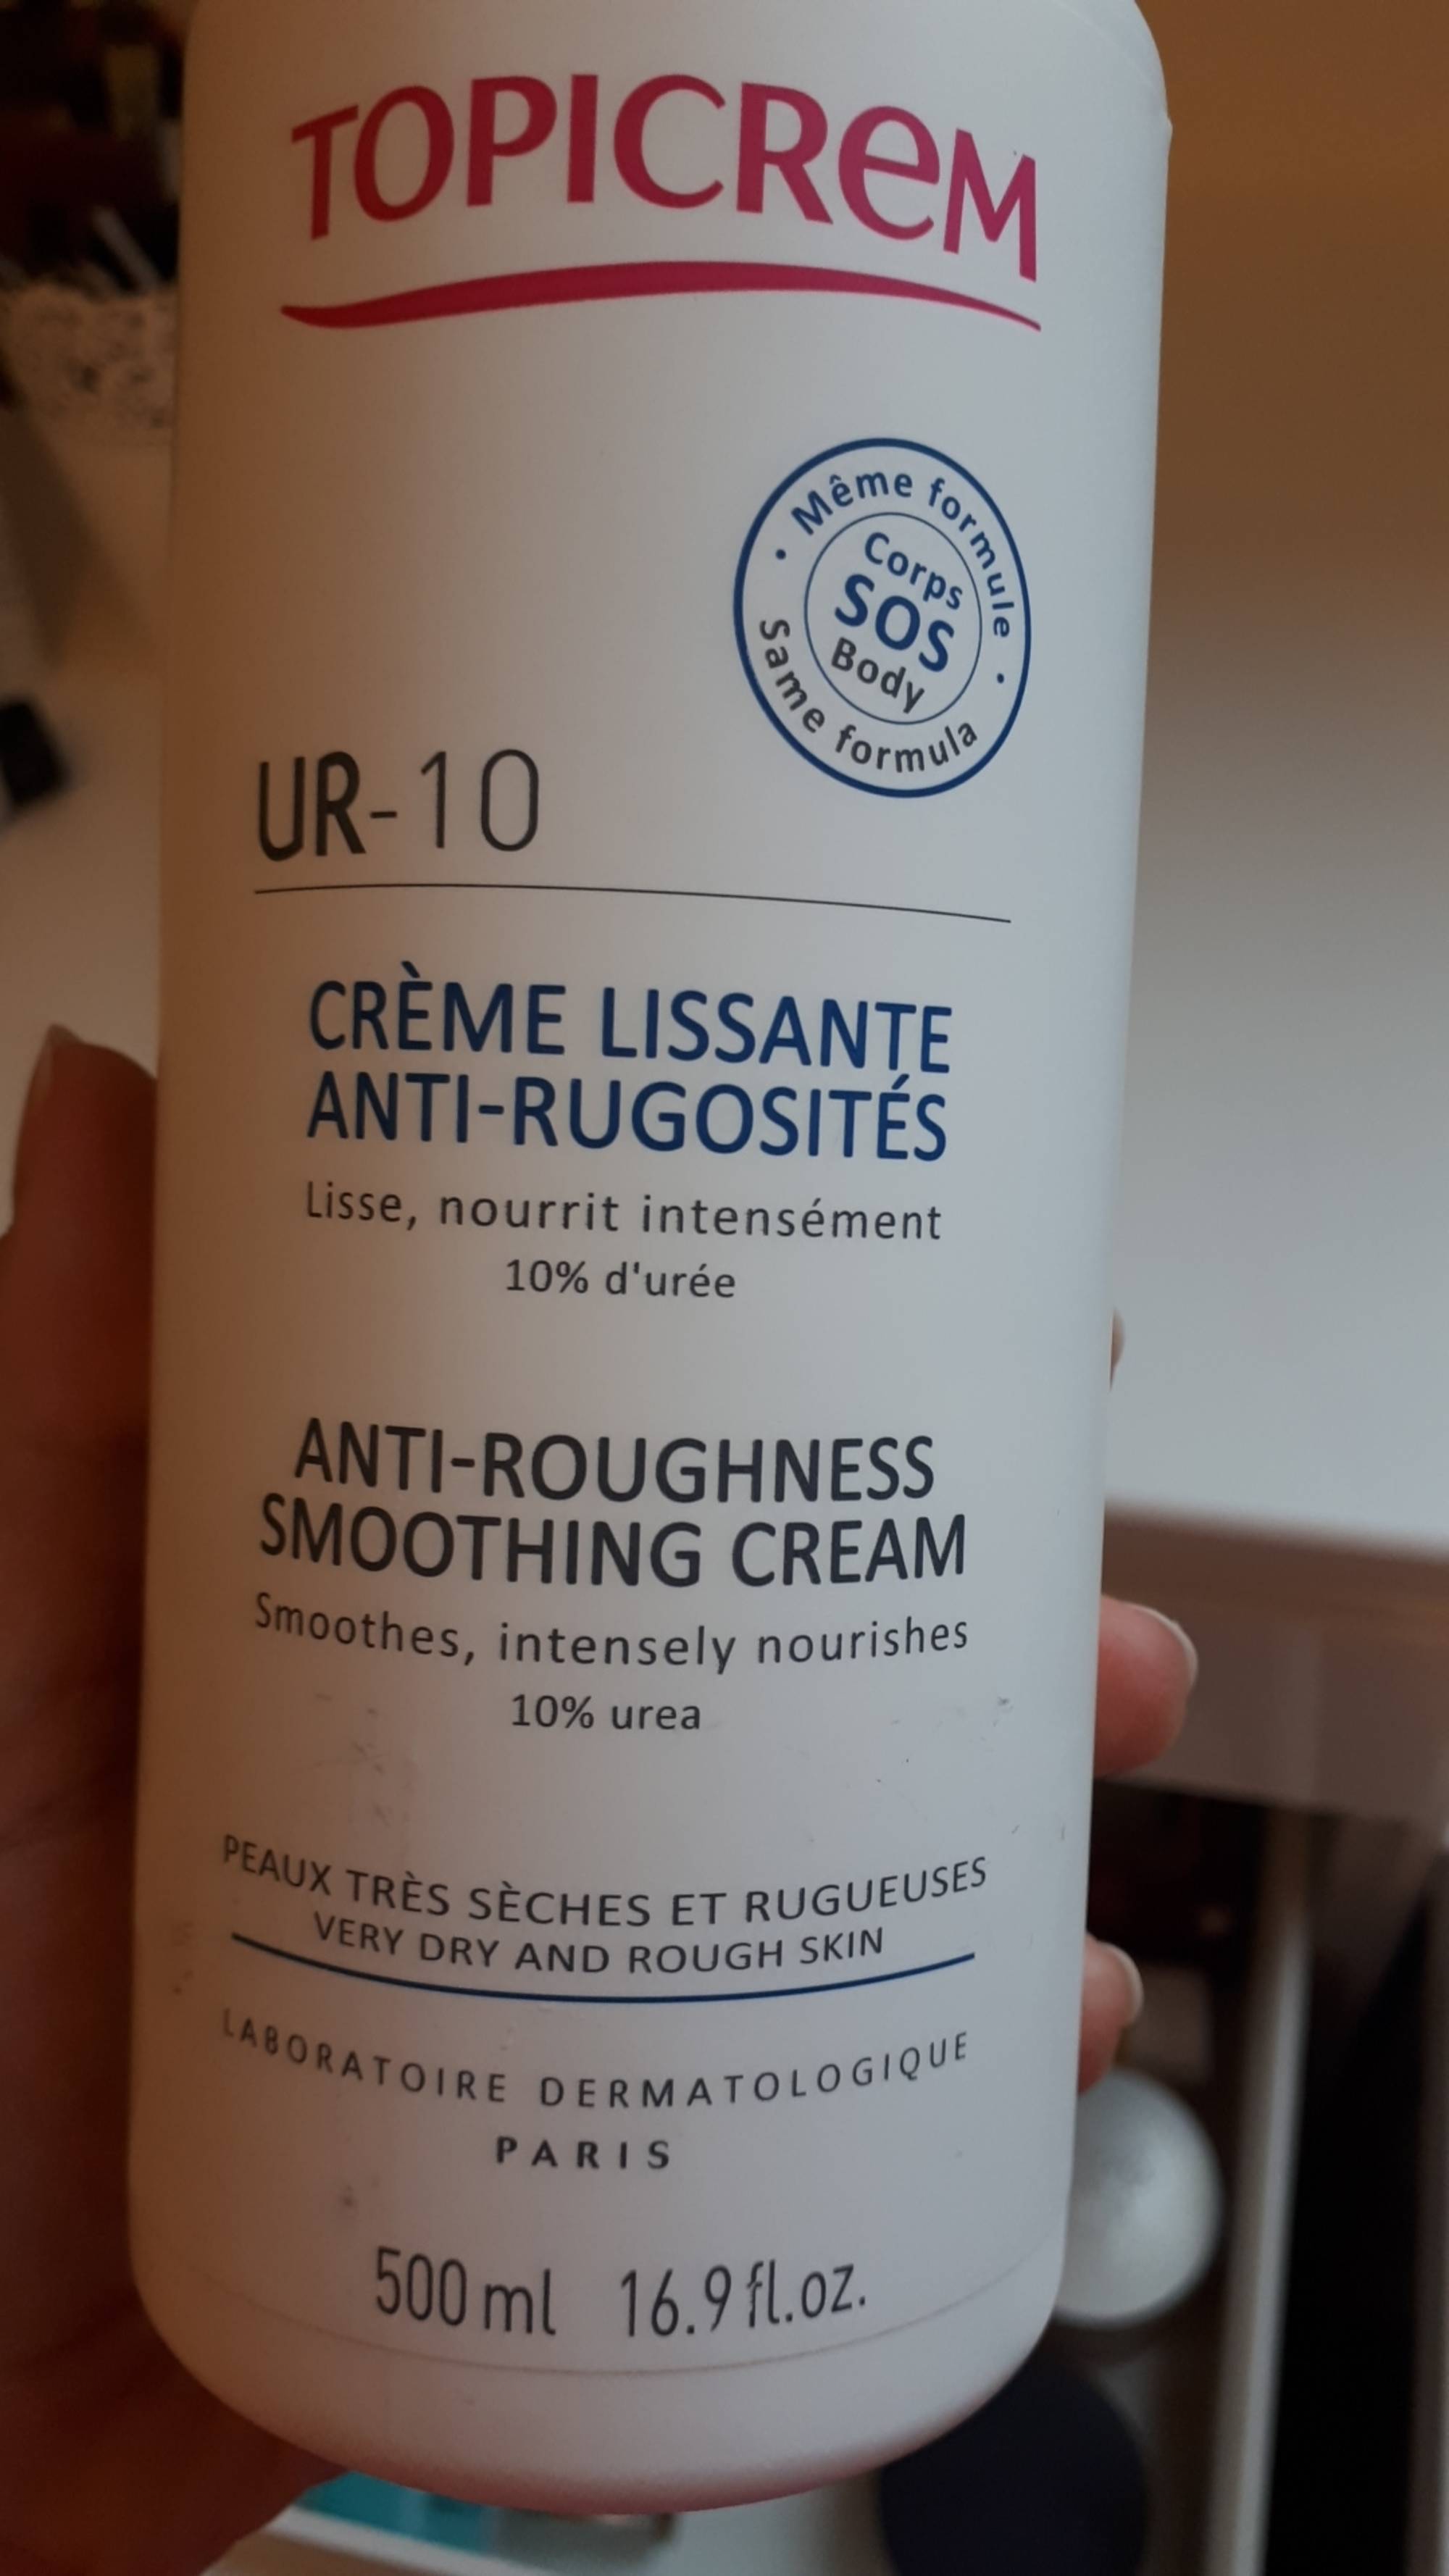 TOPICREM - UR-10 - Crème lissante anti-rugosités